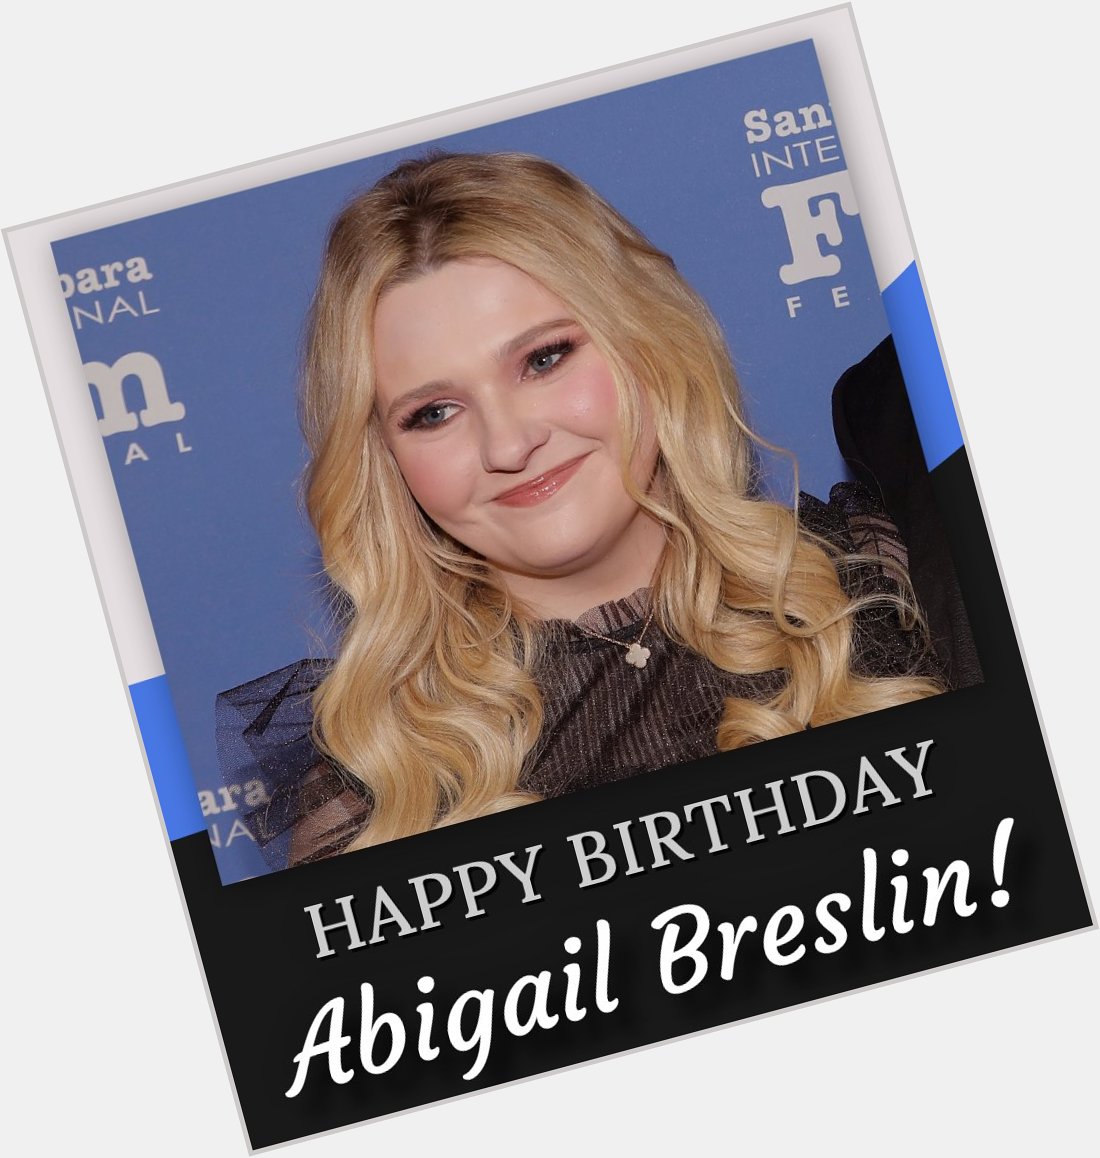 Happy birthday, Abigail Breslin! 